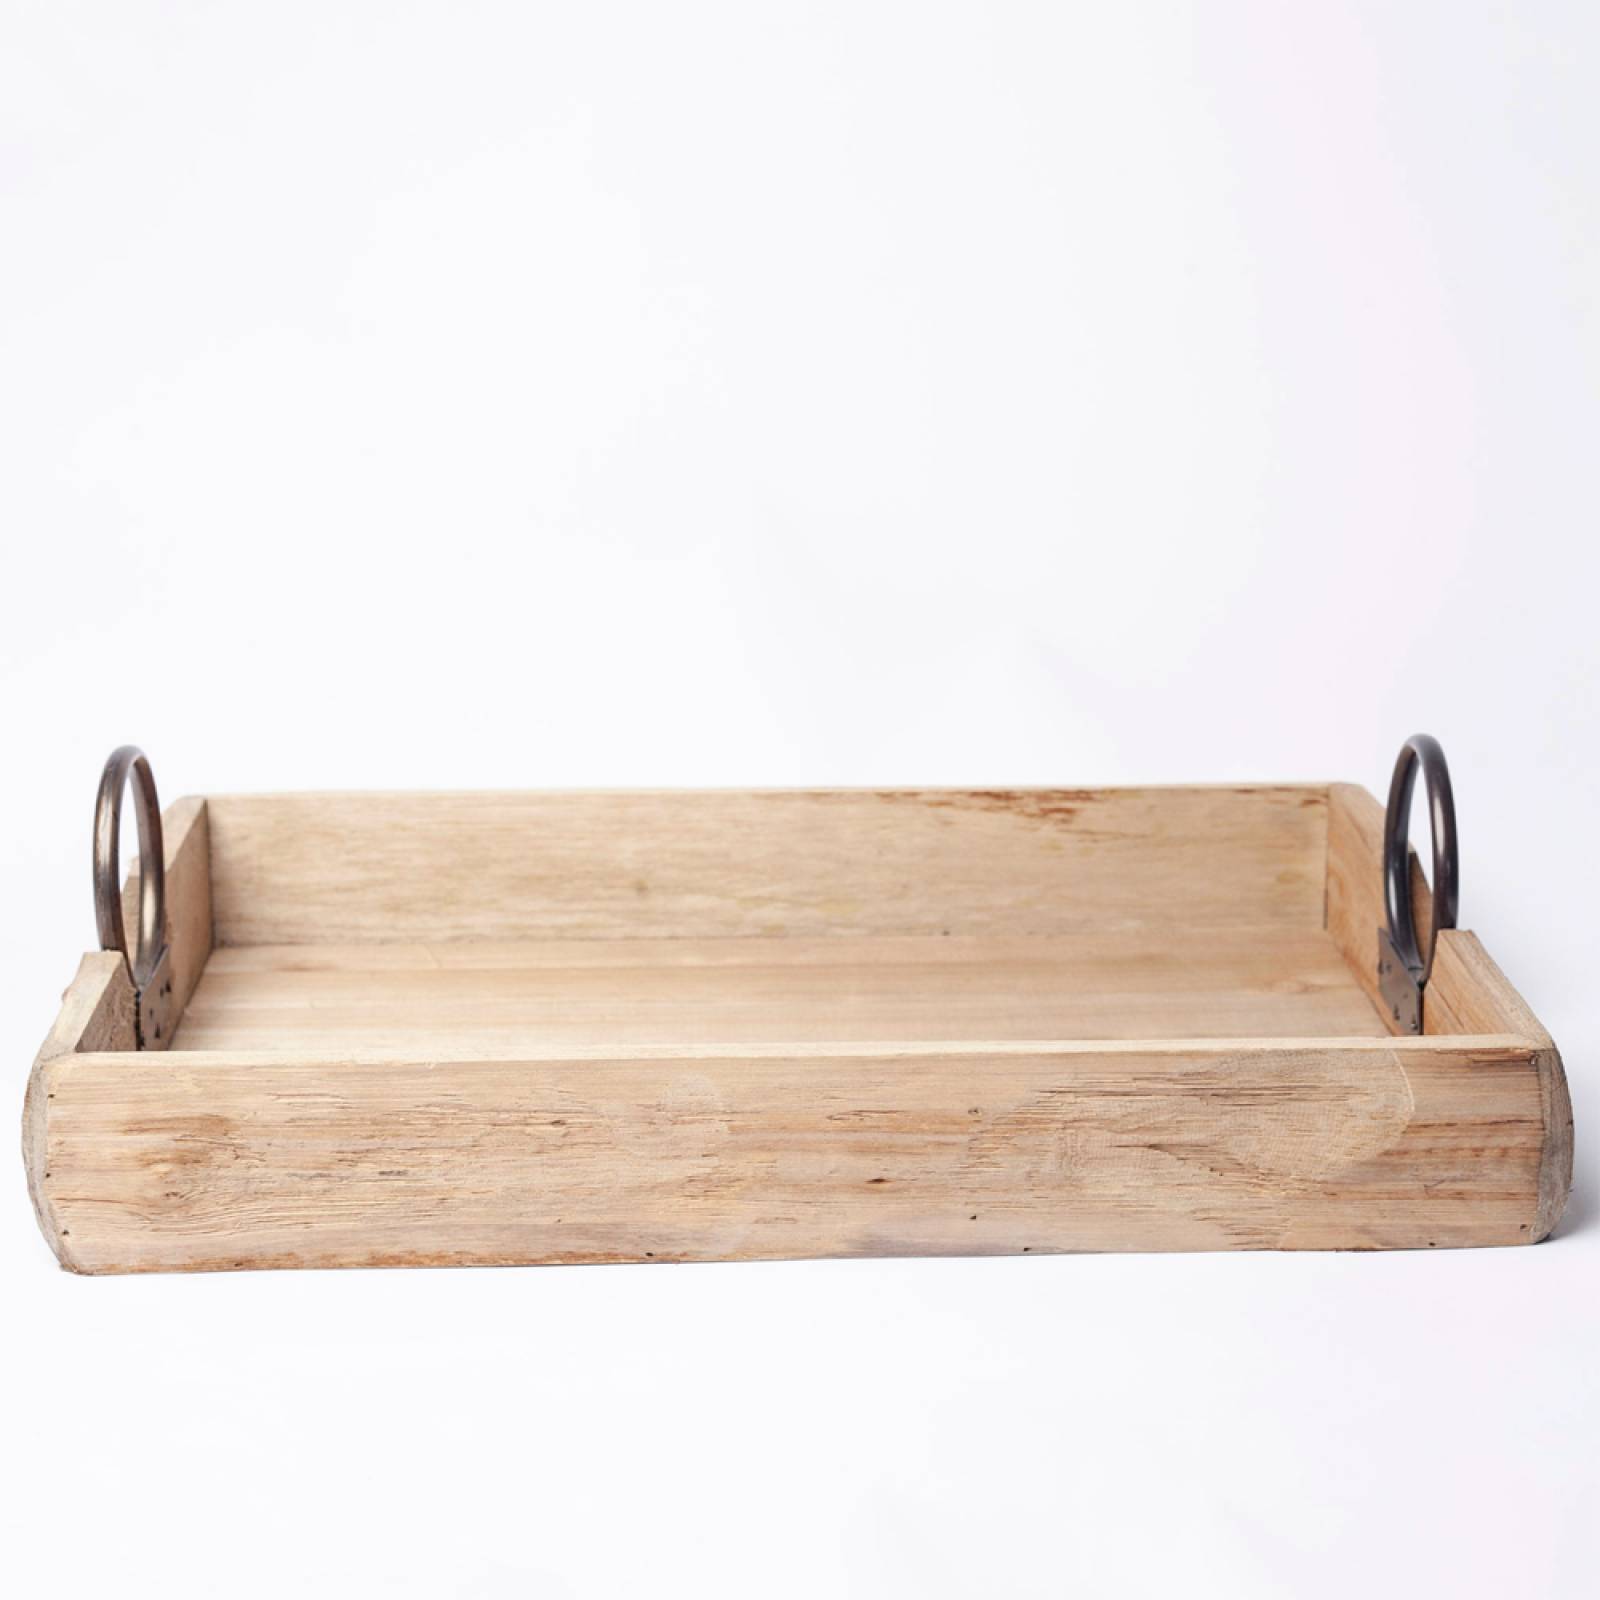 Rustic Rectangular Wooden Tray With Circular Metal Handles thumbnails